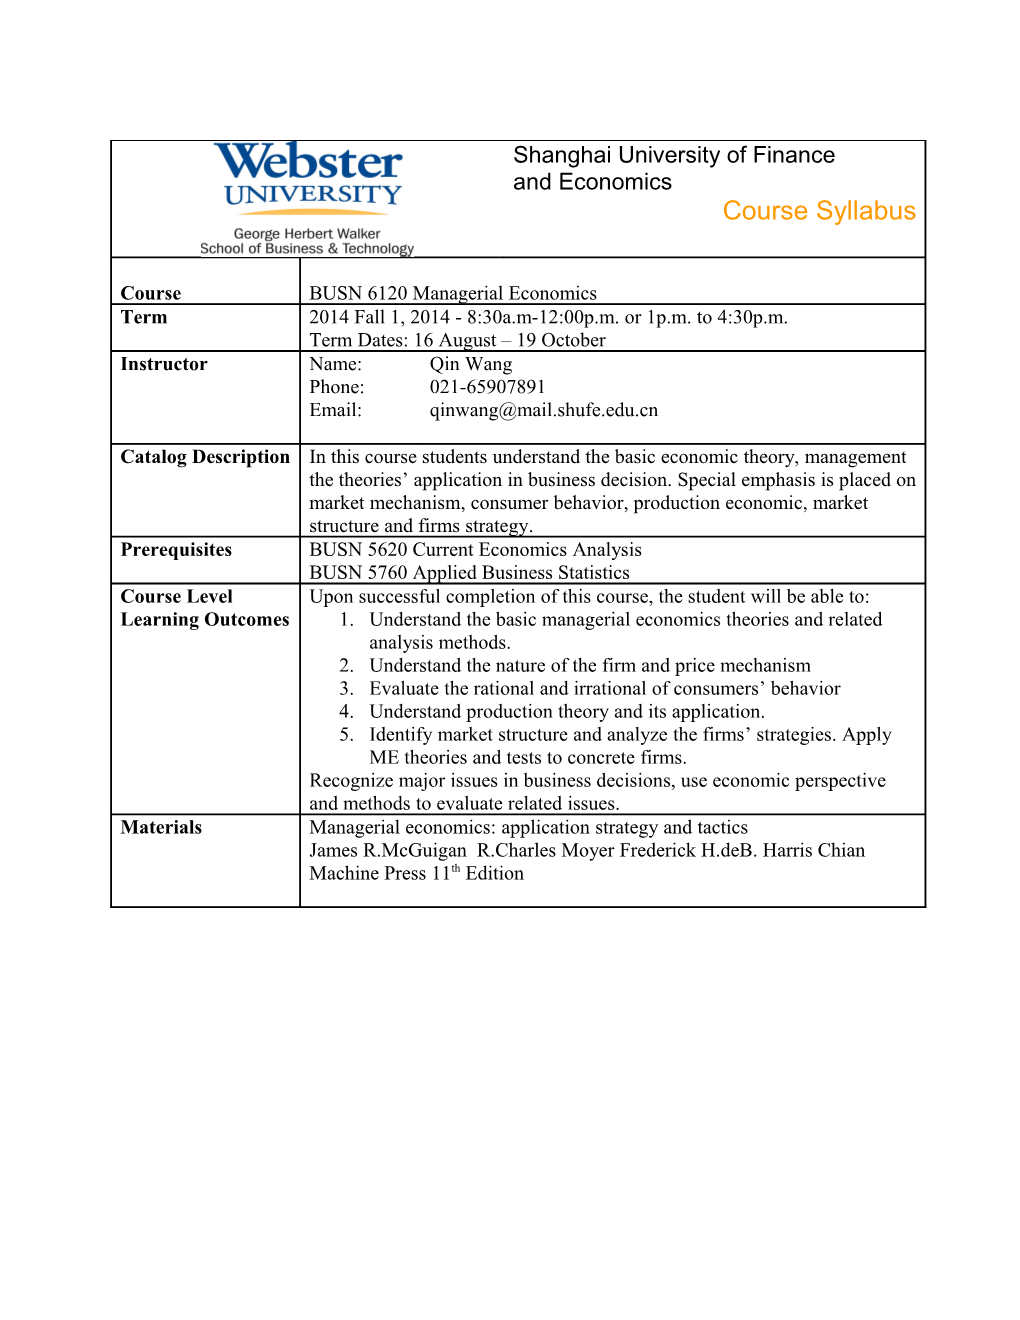 Webster University - Syllabus